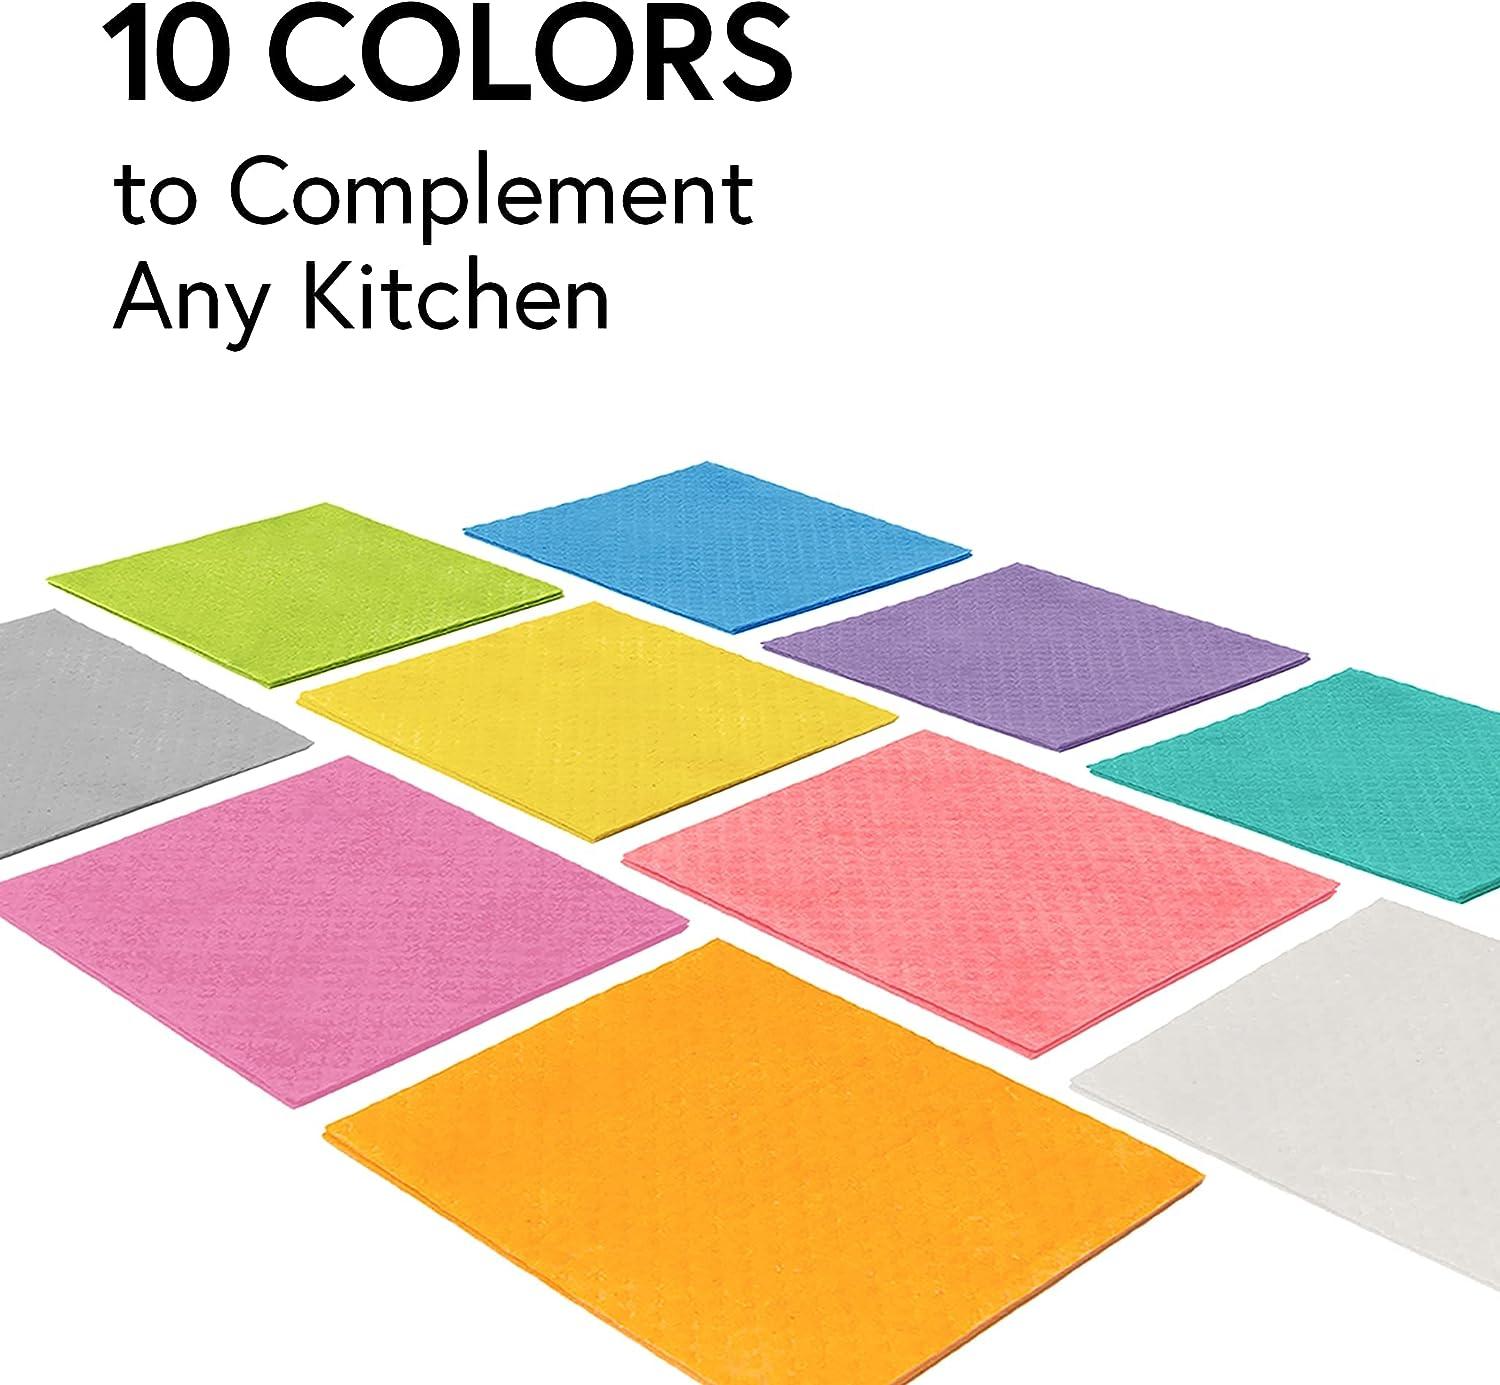 Ultra-Absorbent Reusable Swedish Dish Cloths - 10 Pk Assorted Colors 